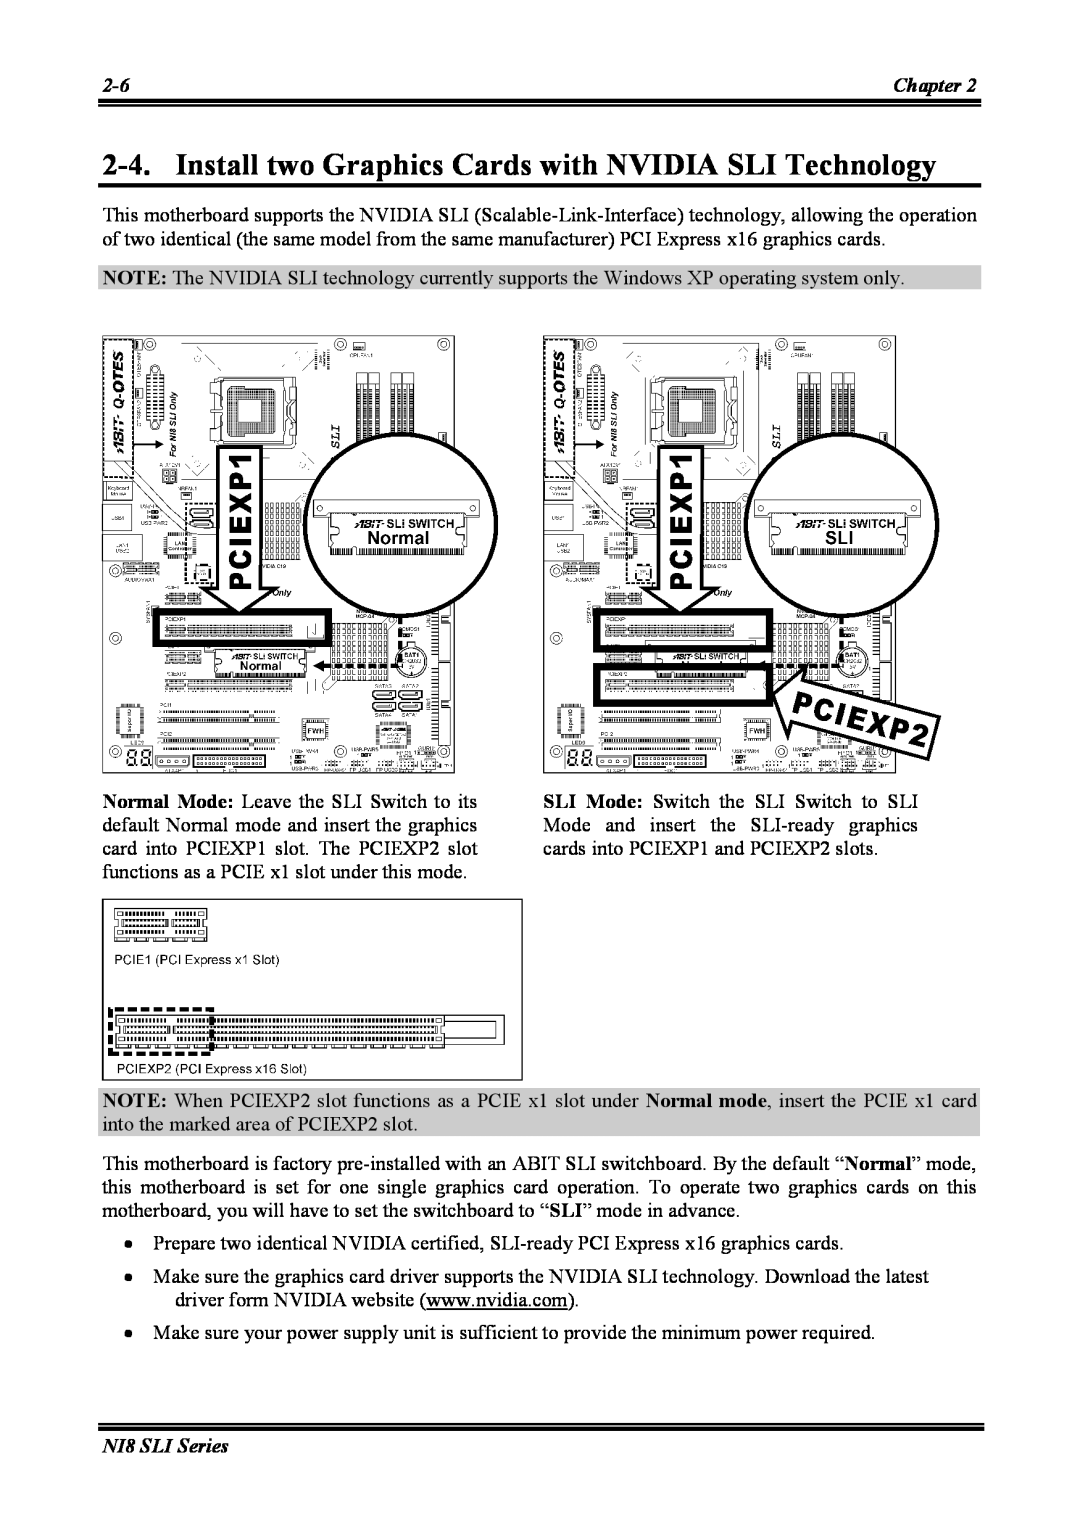 Abit NI8 SLI user manual Install two Graphics Cards with NVIDIA SLI Technology 